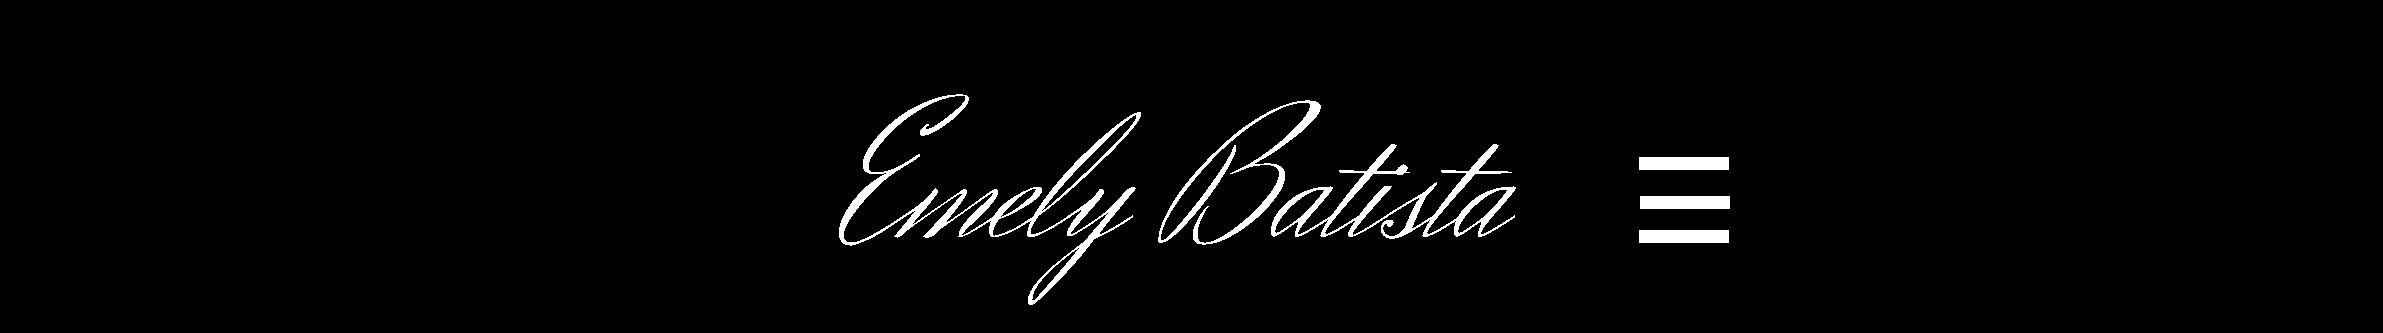 Banner de perfil de Emely Batista